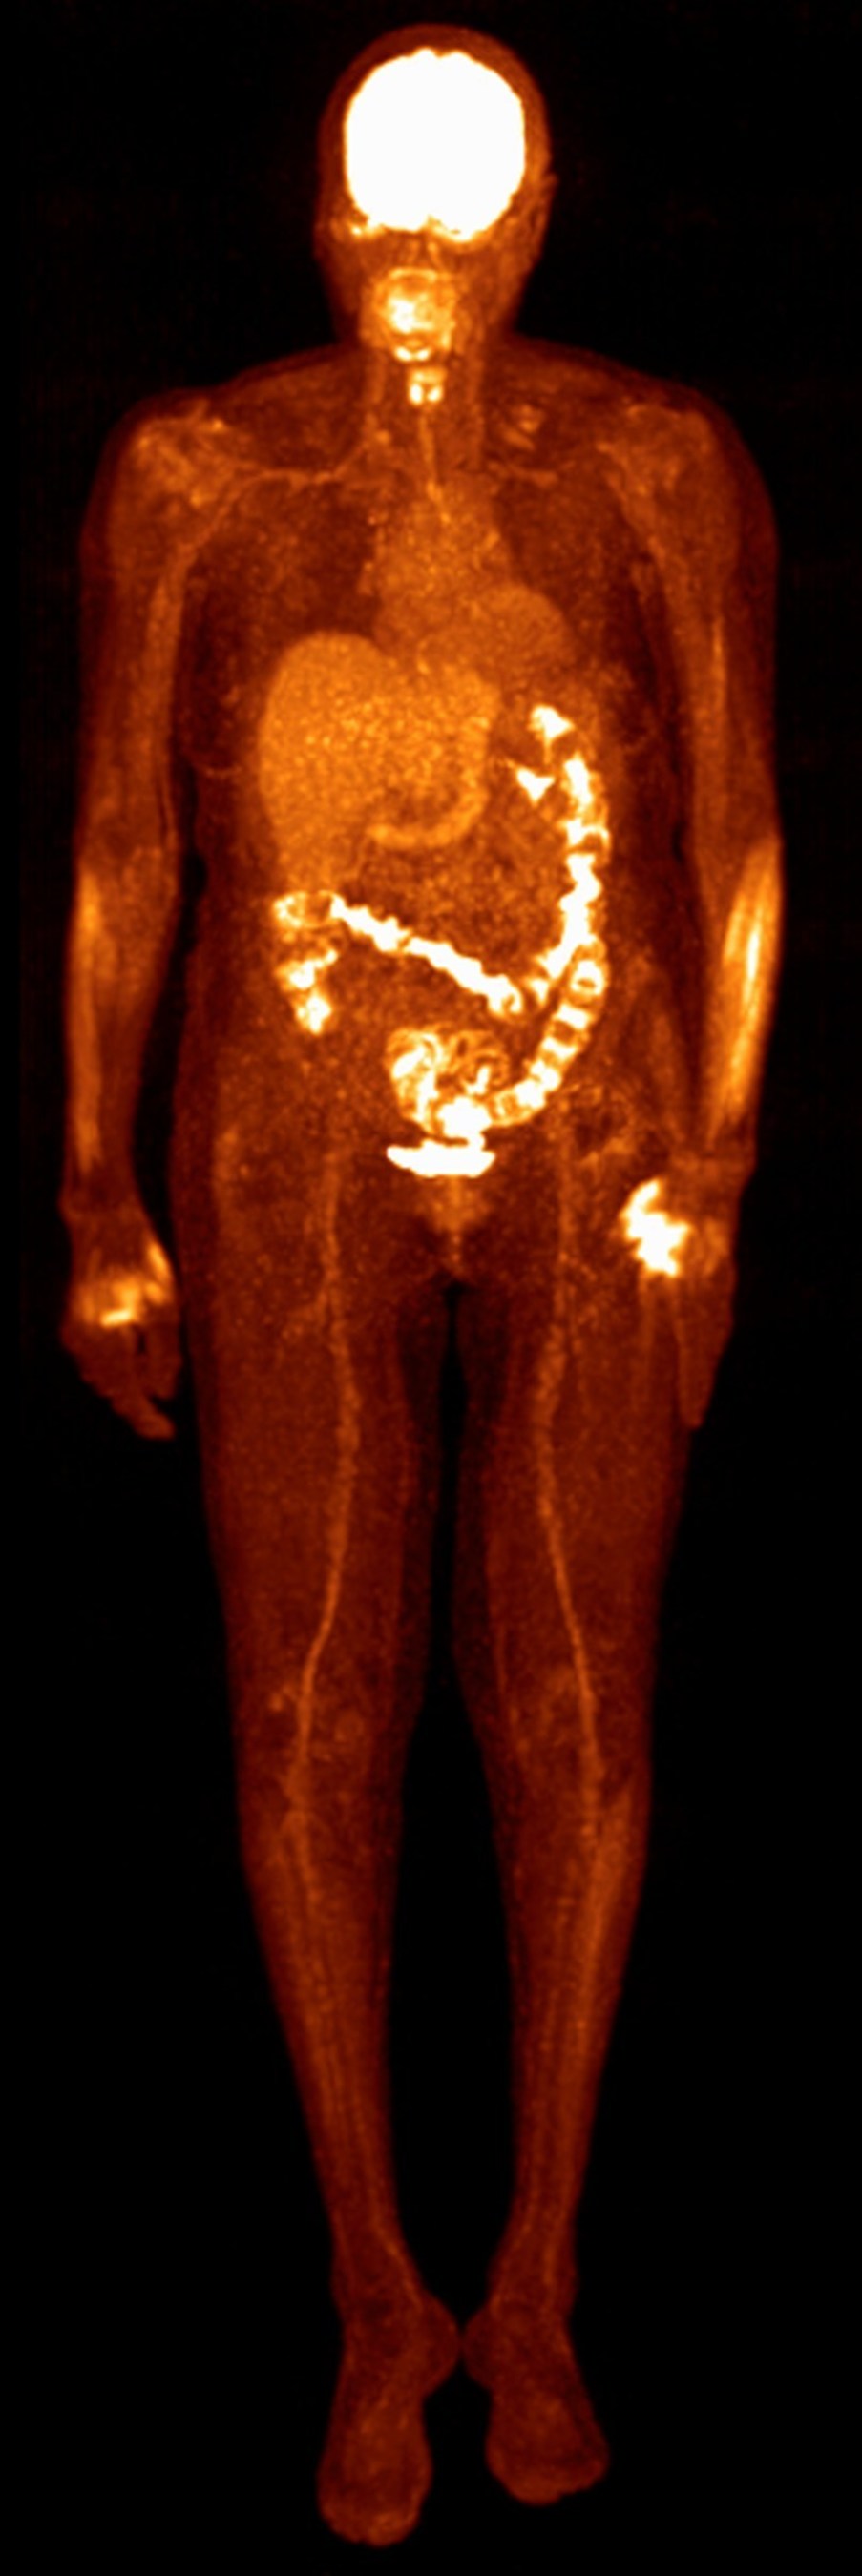 Vereos PET/CT whole body PET scan